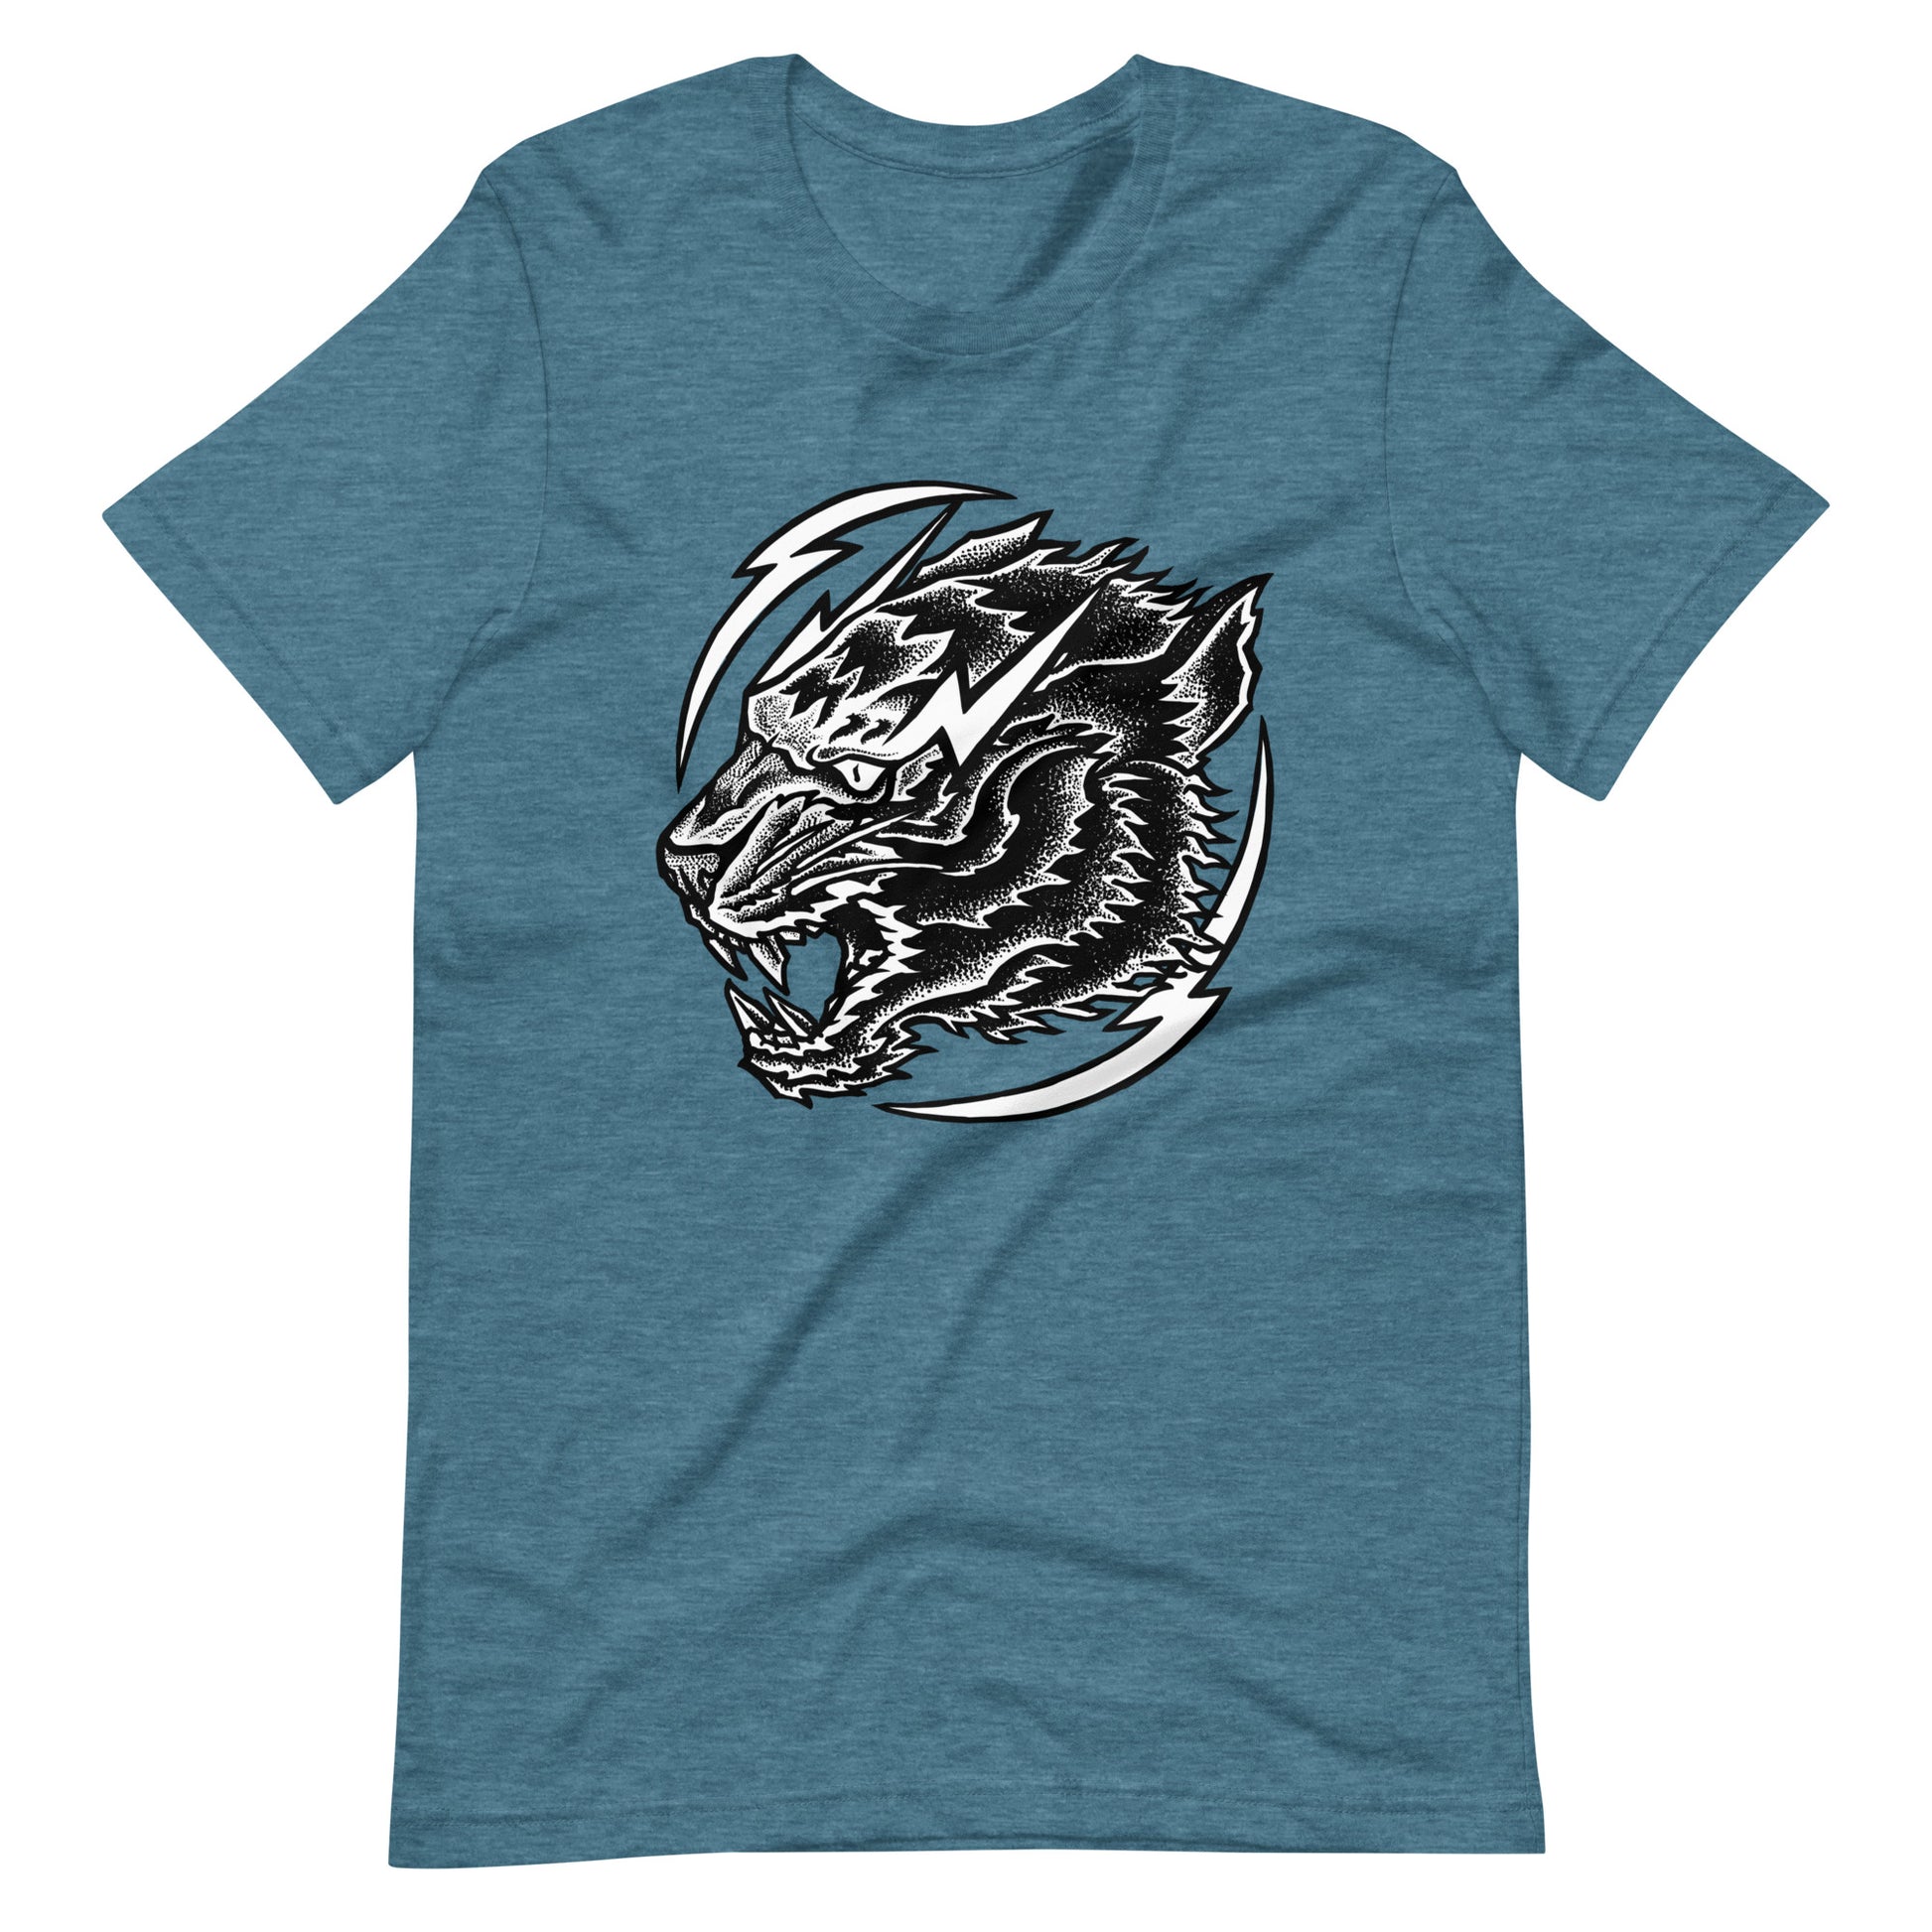 Thunder Tiger - Men's t-shirt - Heather Deep Teal Front